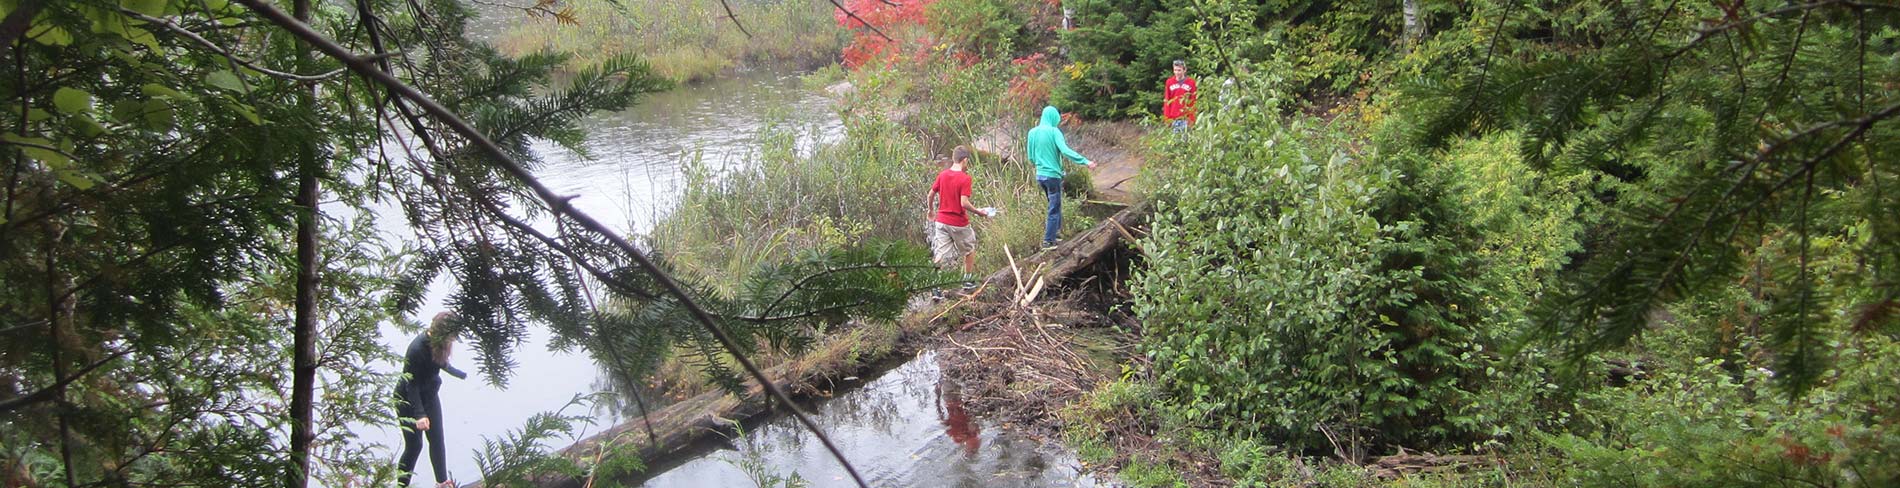 People cross a stream using a fallen log.